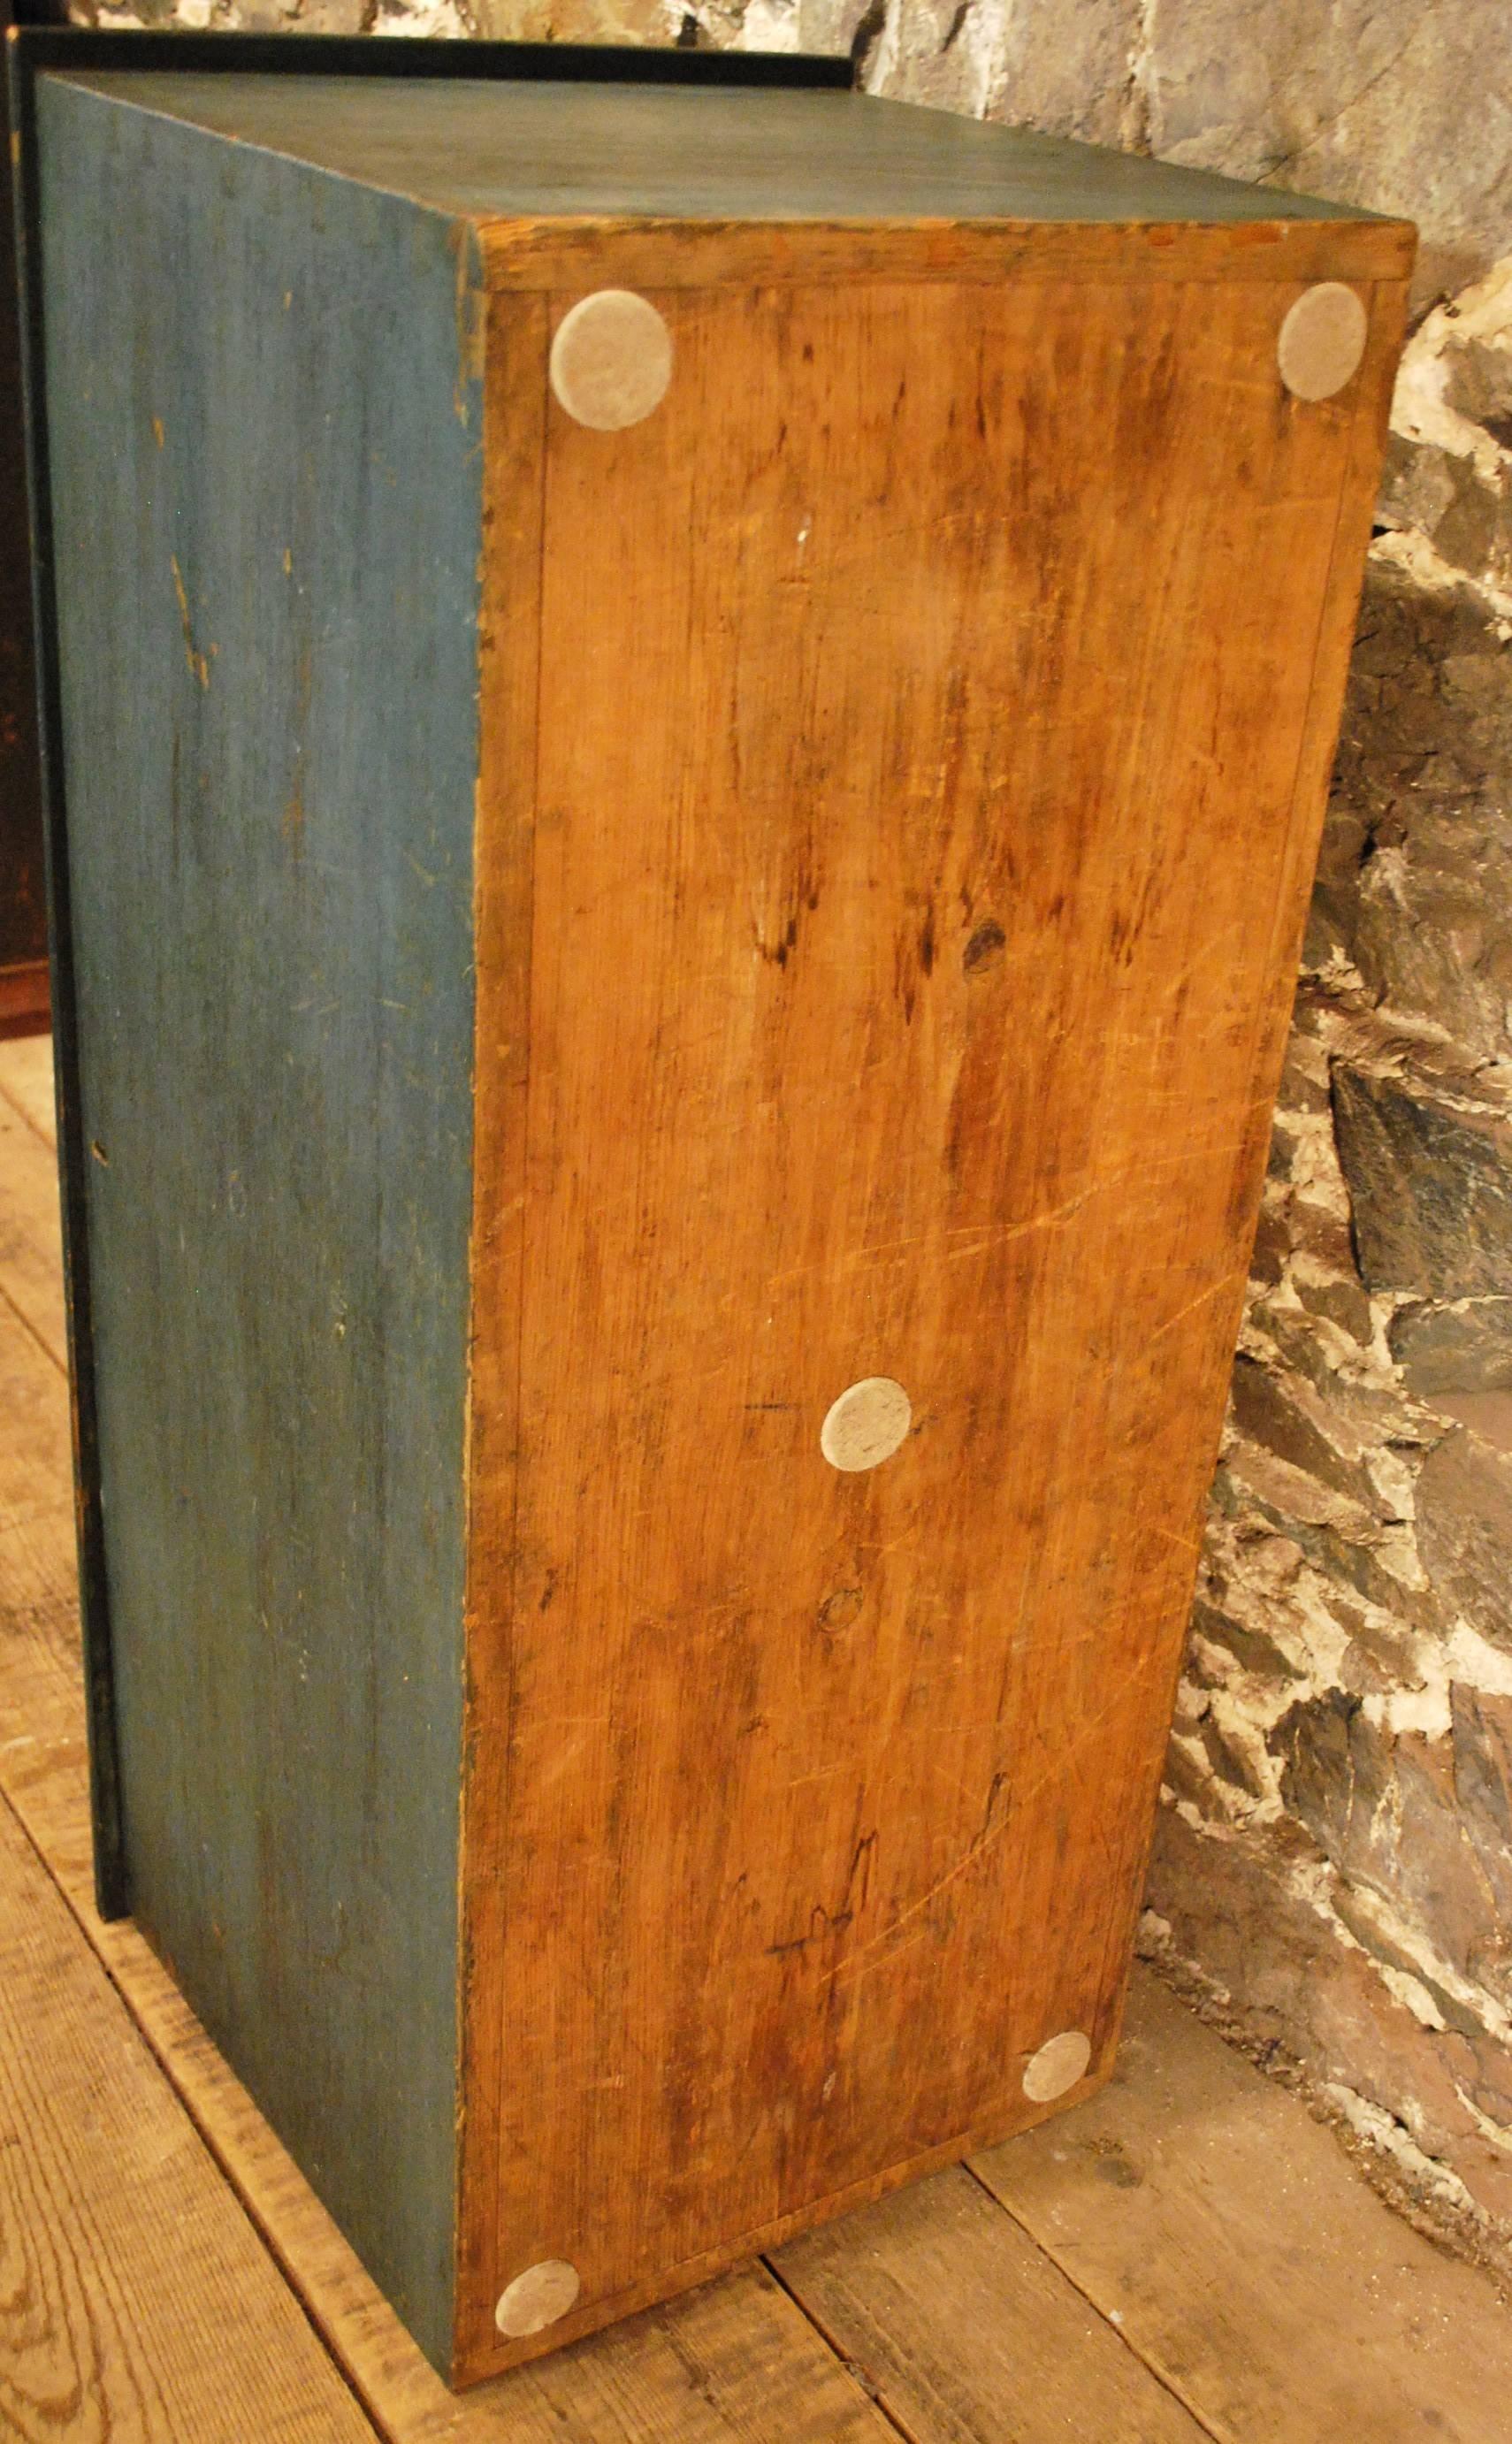 Pine Antique Flat Top Trunk in Original Blue Paint, circa 1880